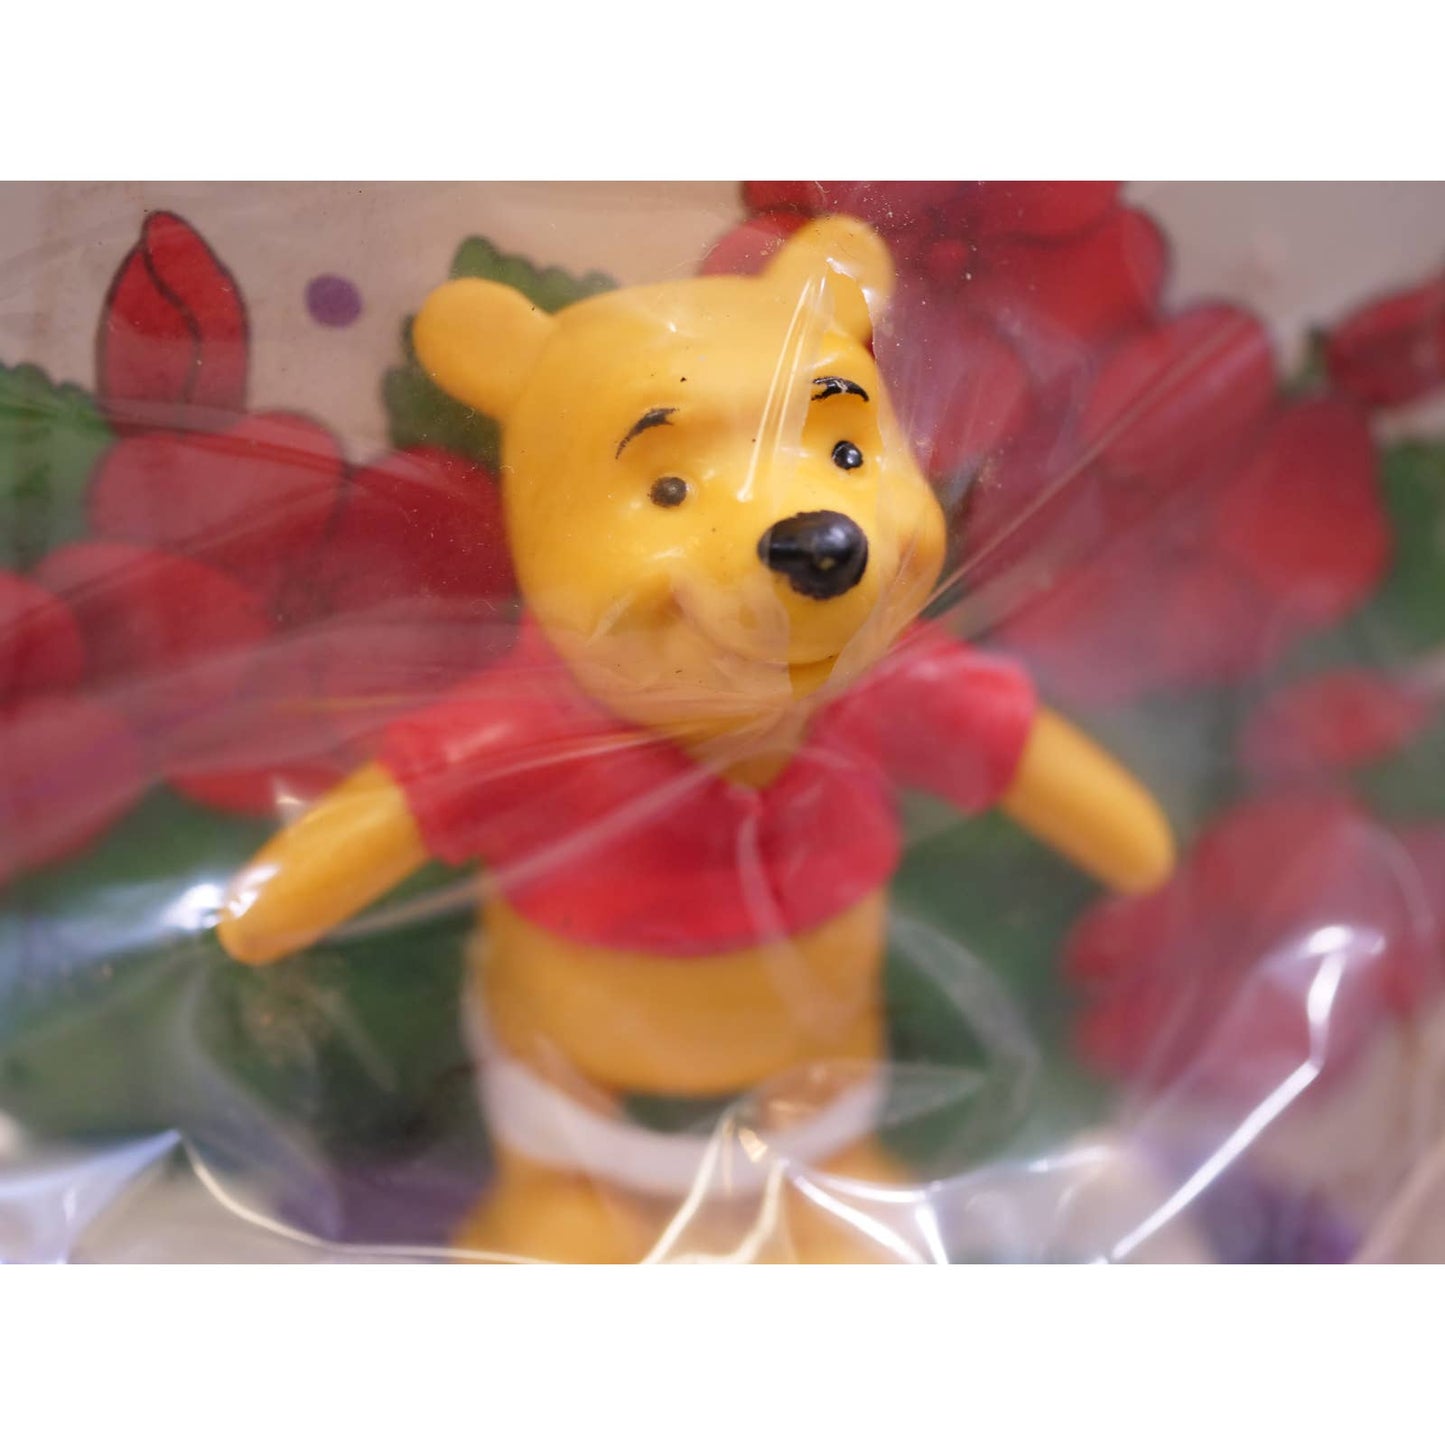 Pooh in a Bucket!!!- Flower Pot Garden Growing Kit - Vintage - Original Package